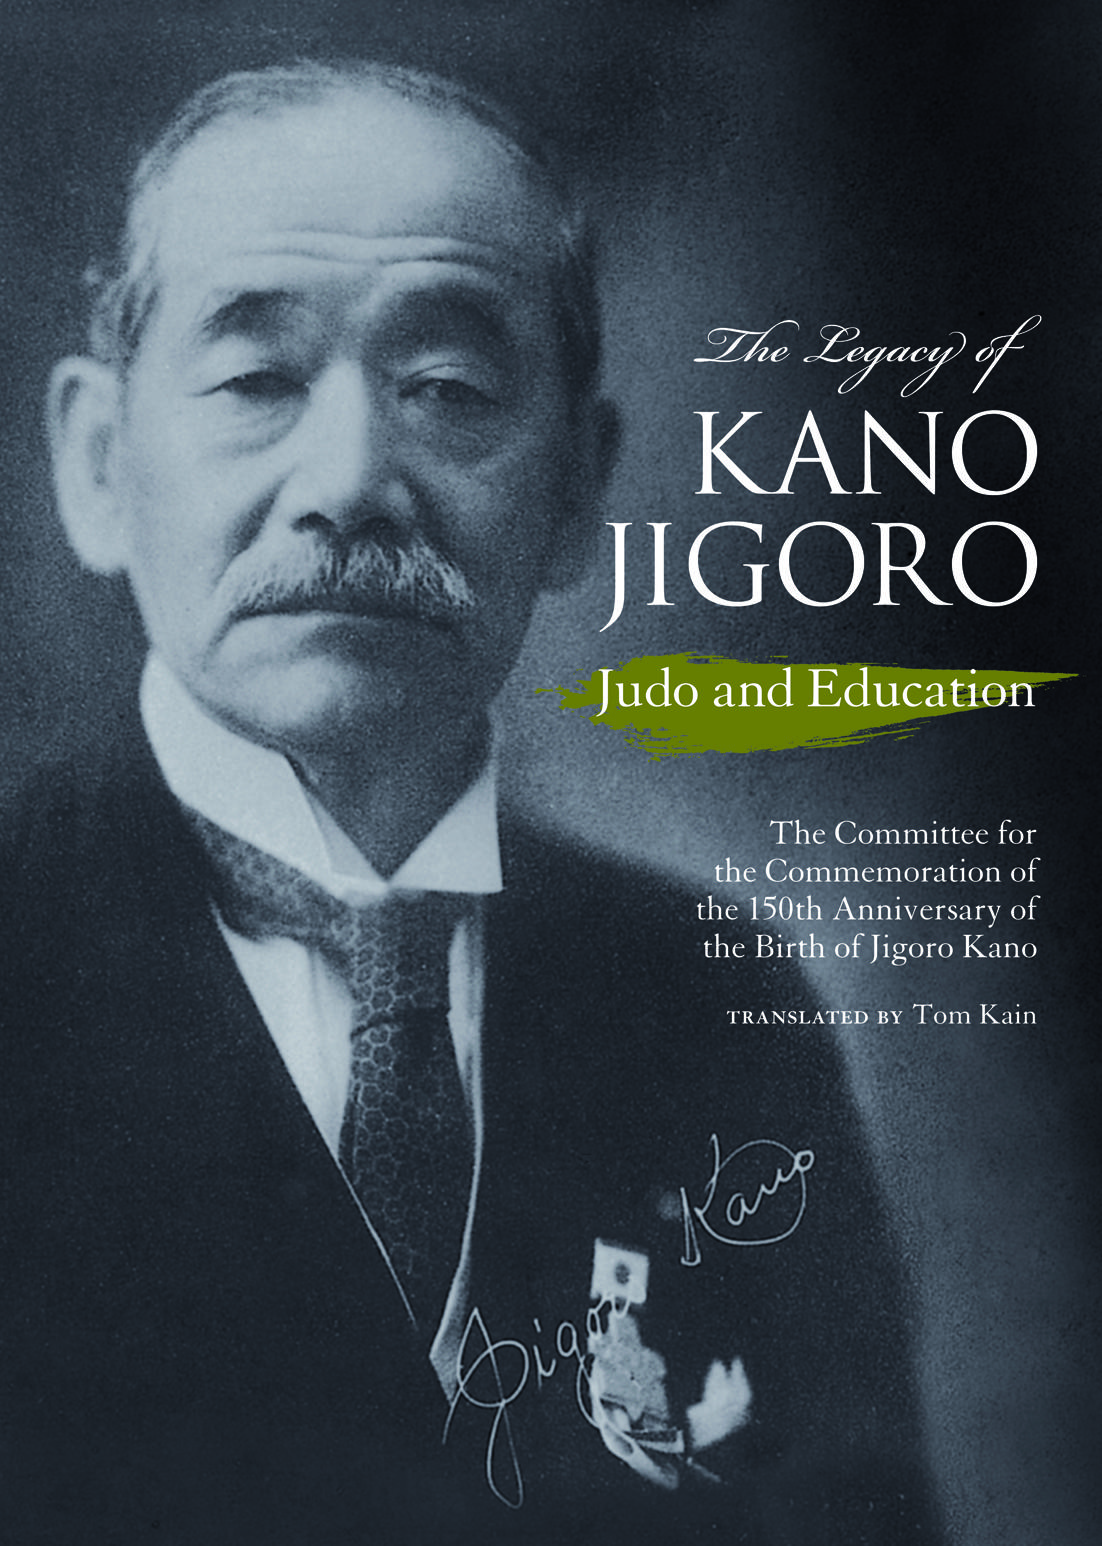 The Legacy of Kano Jigoro